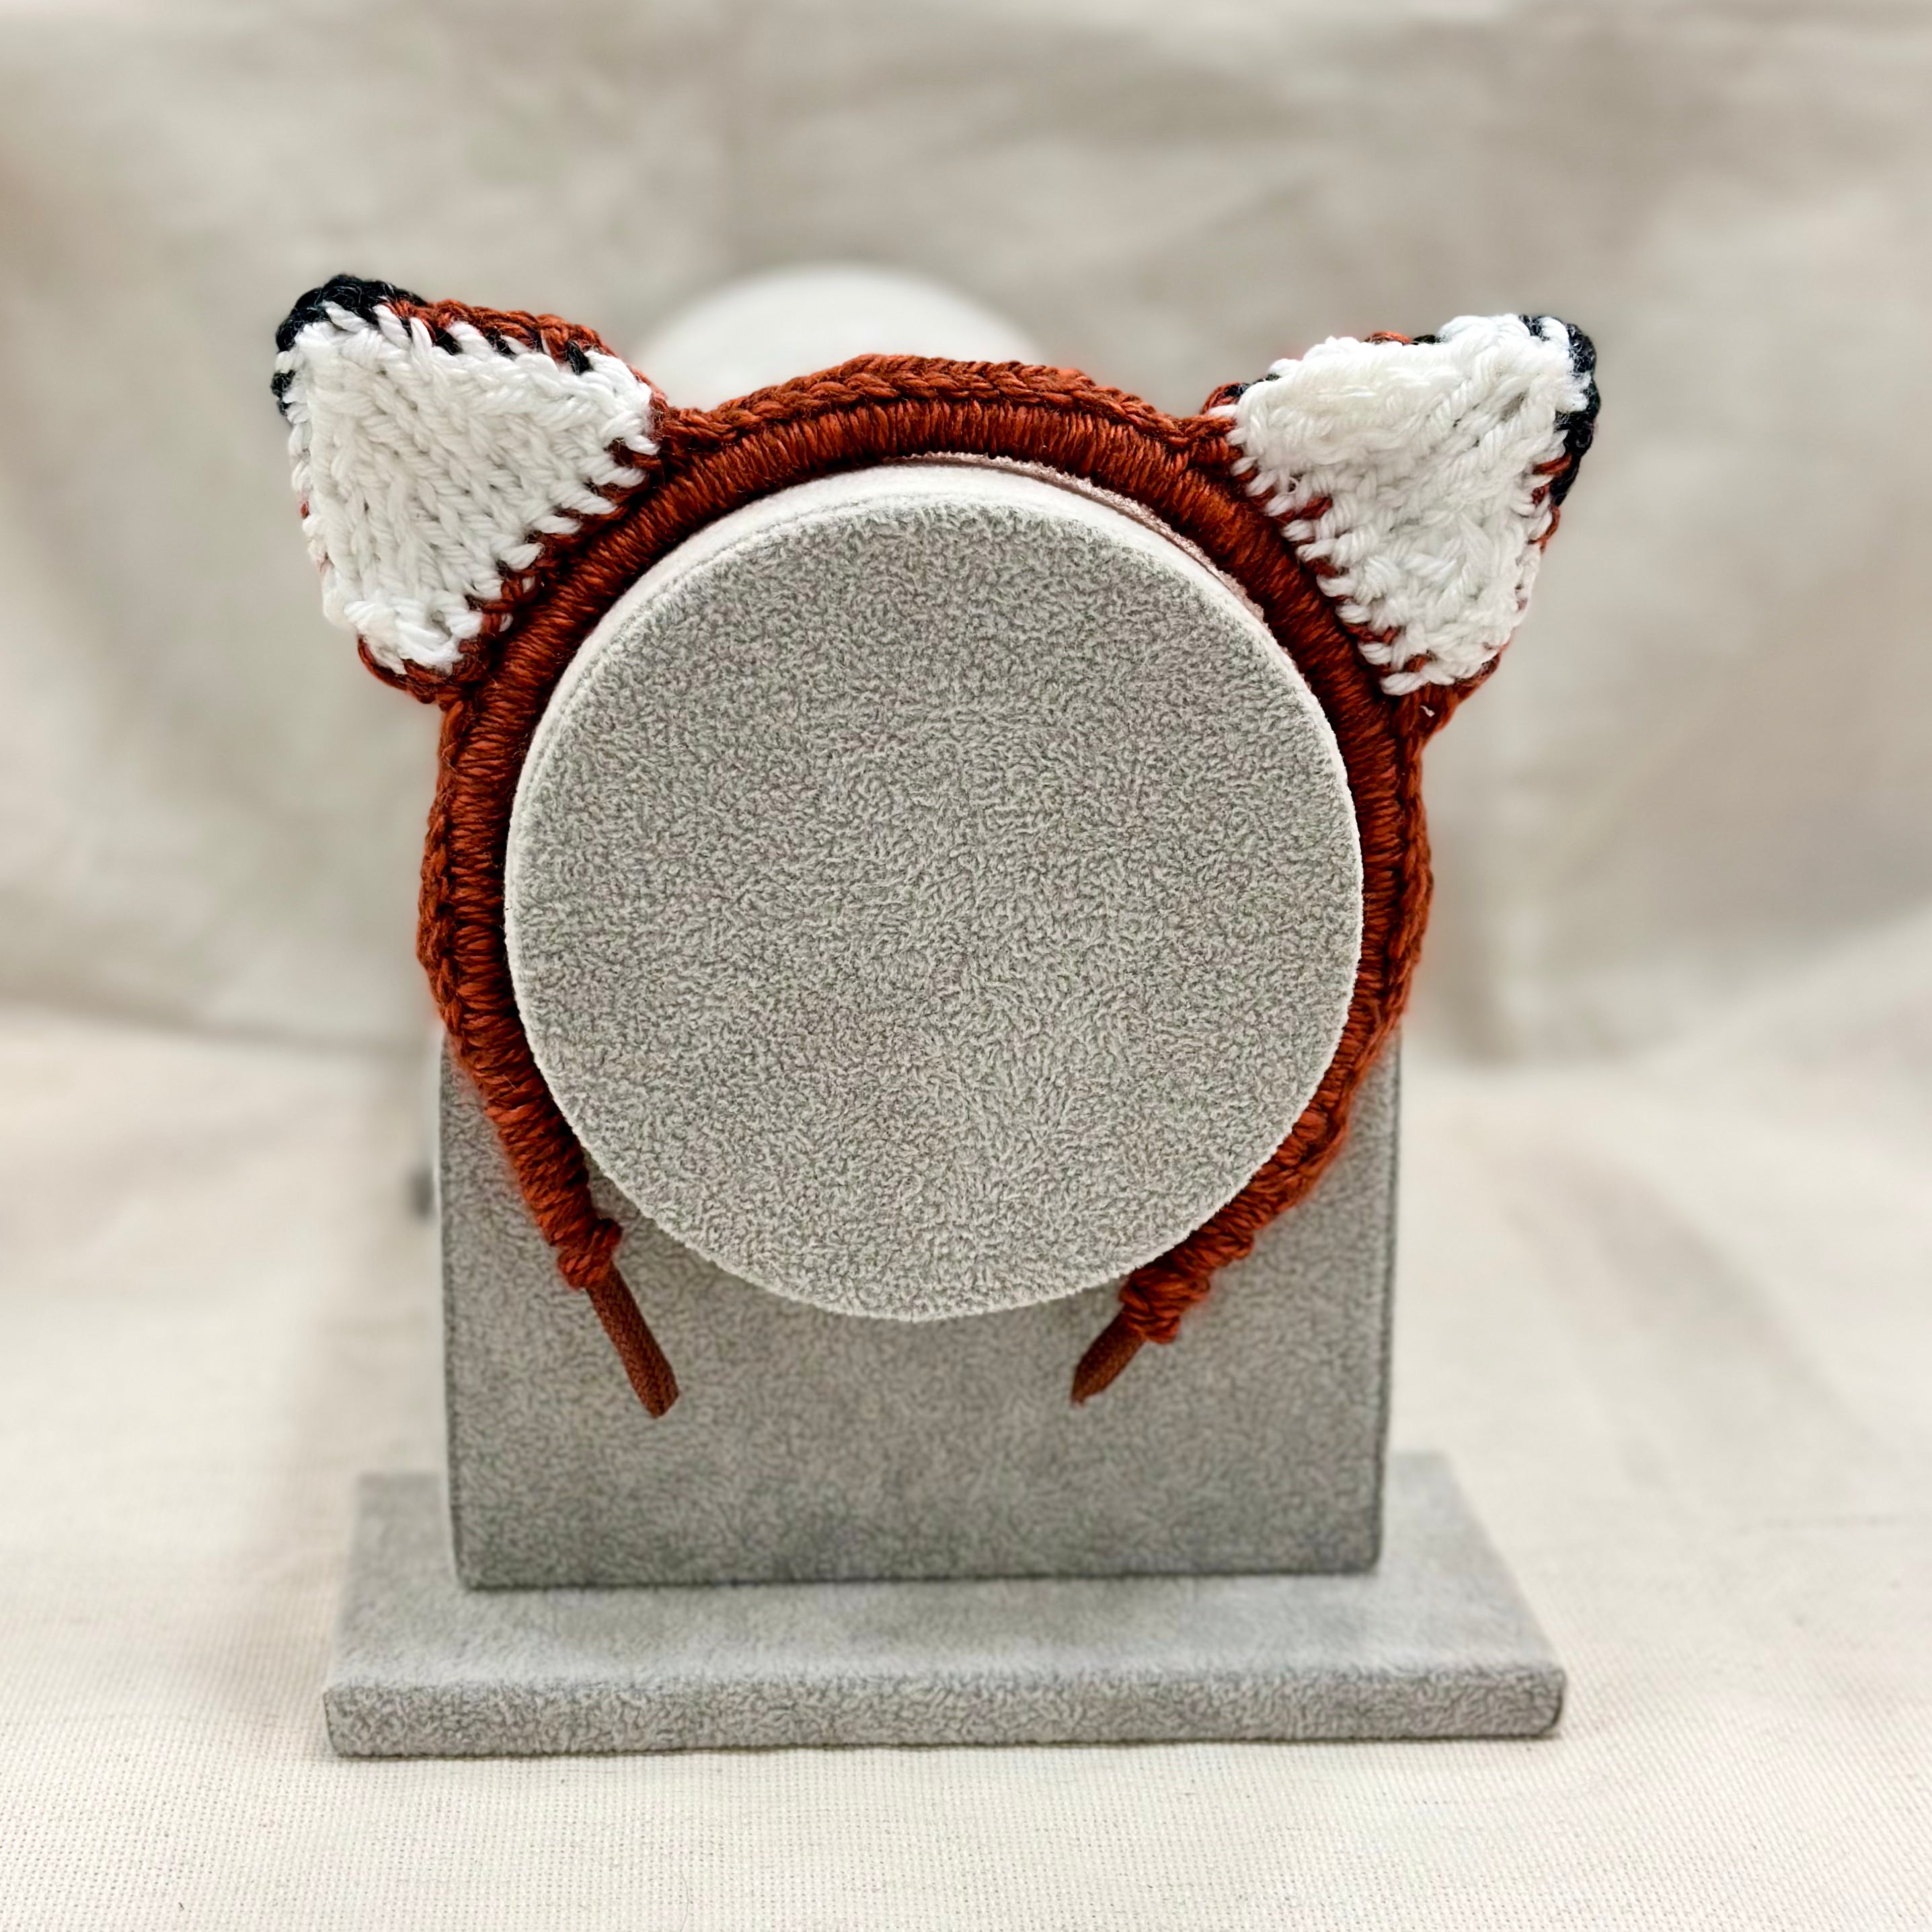 Hand Crochet Animal Ear Headband